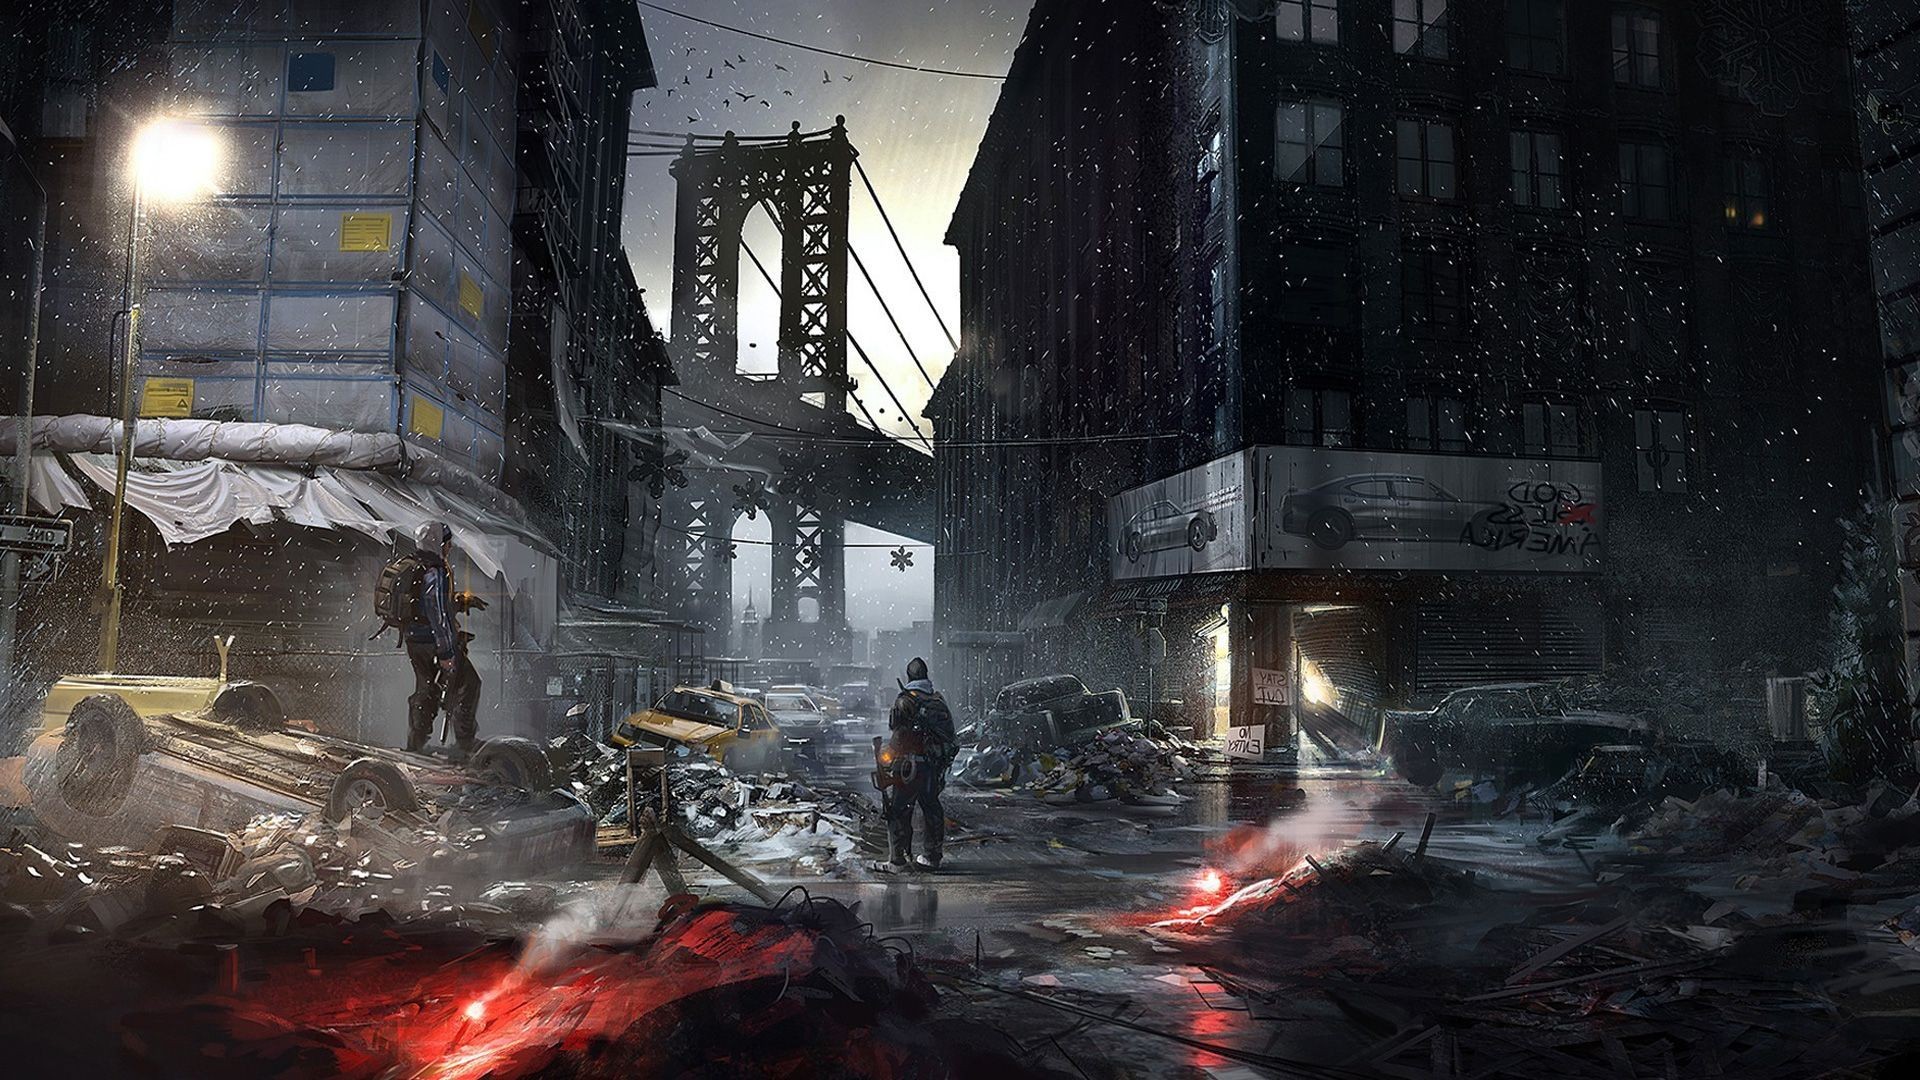 General 1920x1080 Tom Clancy's The Division apocalyptic Tom Clancy's video games concept art Manhattan New York City PC gaming video game art Manhattan Bridge